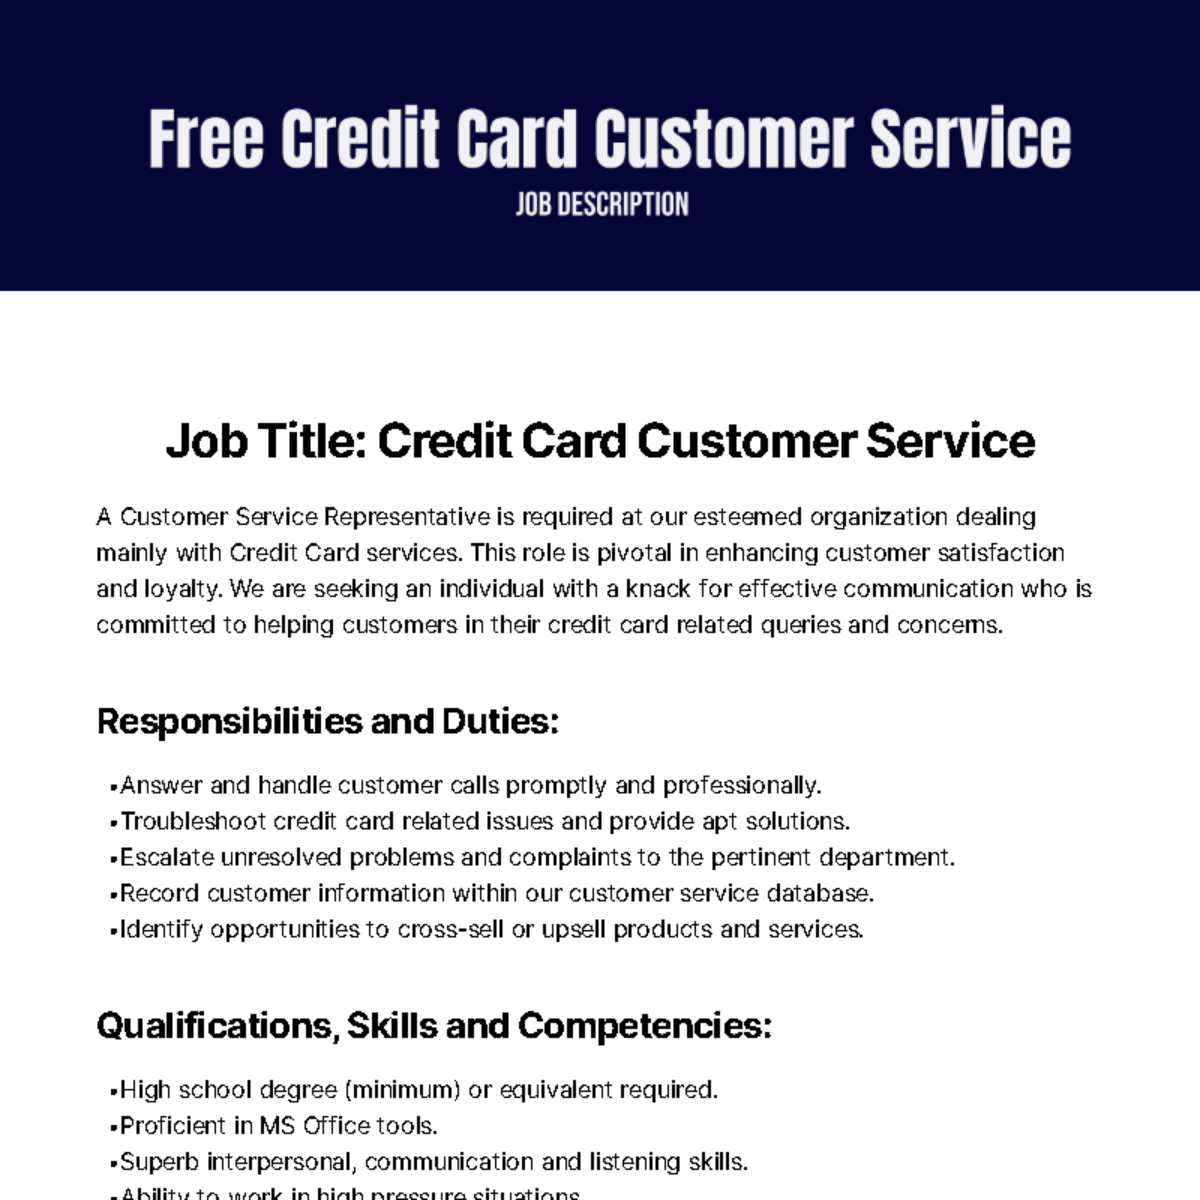 Credit Card Customer Service Job Description Template